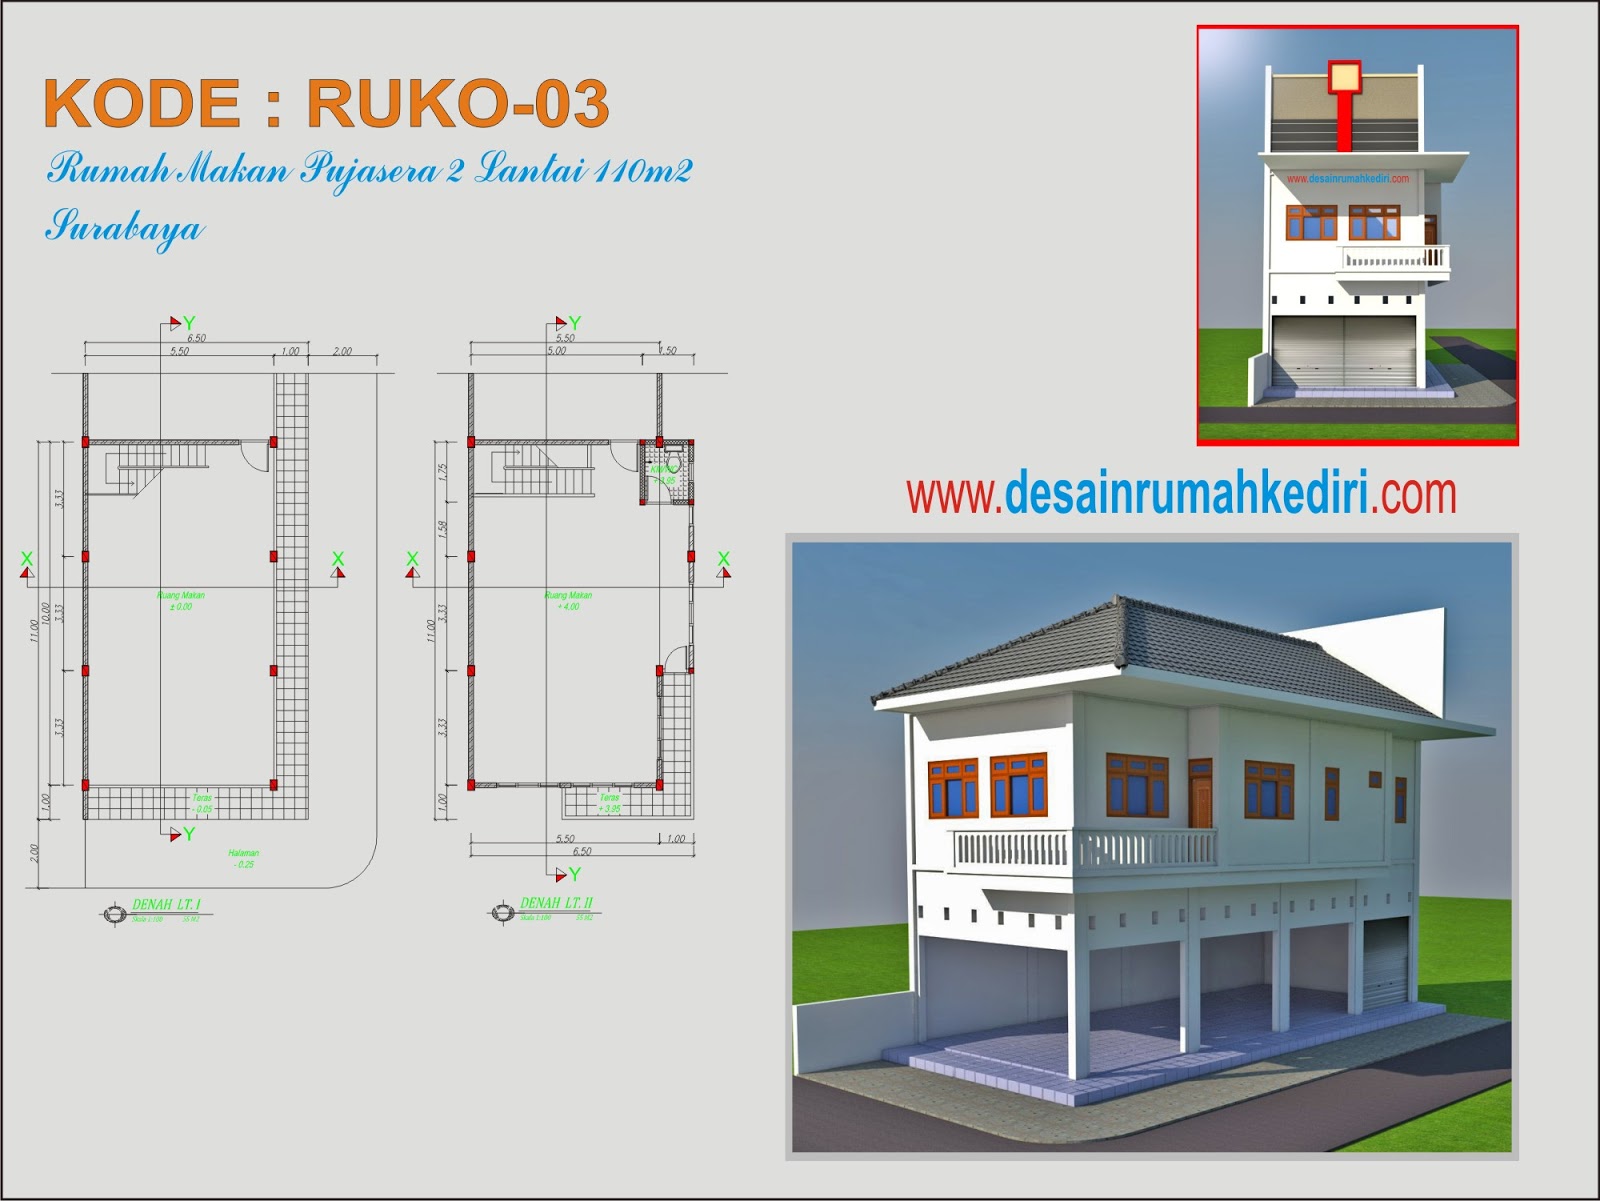 RUKO 03 Rumah Makan Pujasera 2 Lantai Surabaya Jasa 